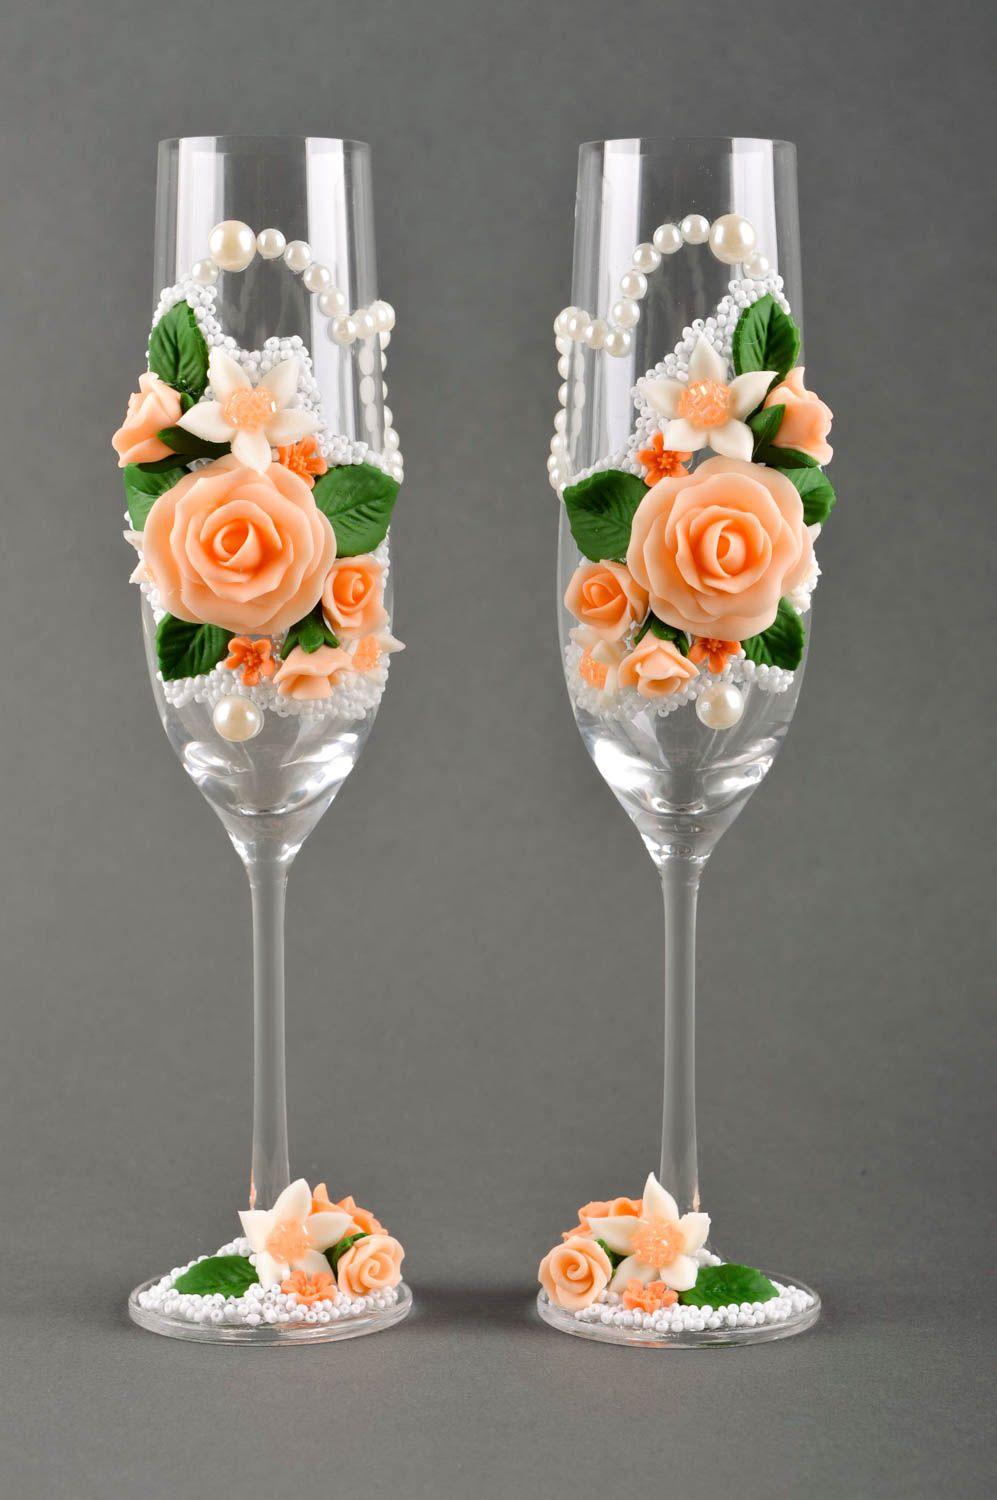 Unusual handmade wine glass champagne glass table setting stemware ideas photo 2